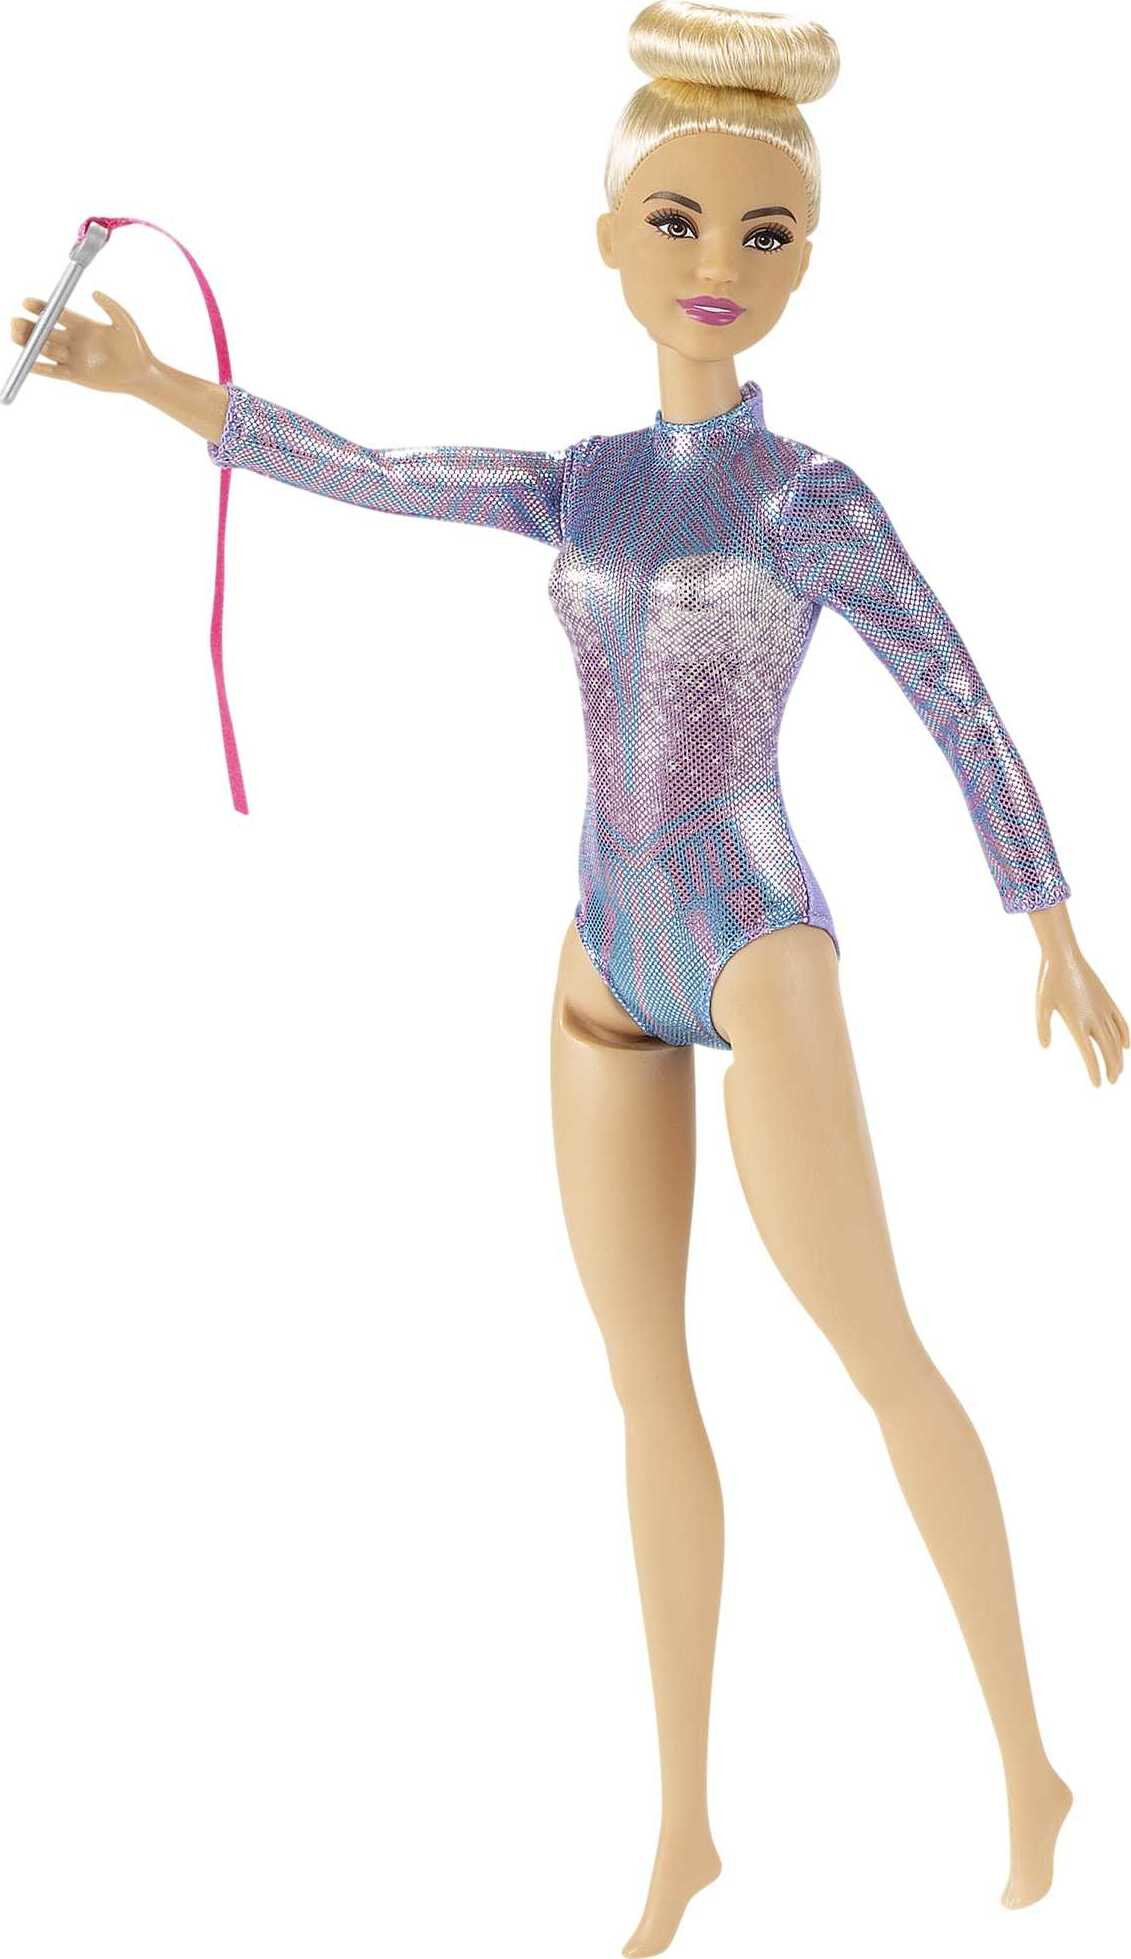 Barbie Rhythmic Gymnast Fashion Doll Dressed in Shimmery Leotard with Blonde Hair & Brown Eyes - image 3 of 6